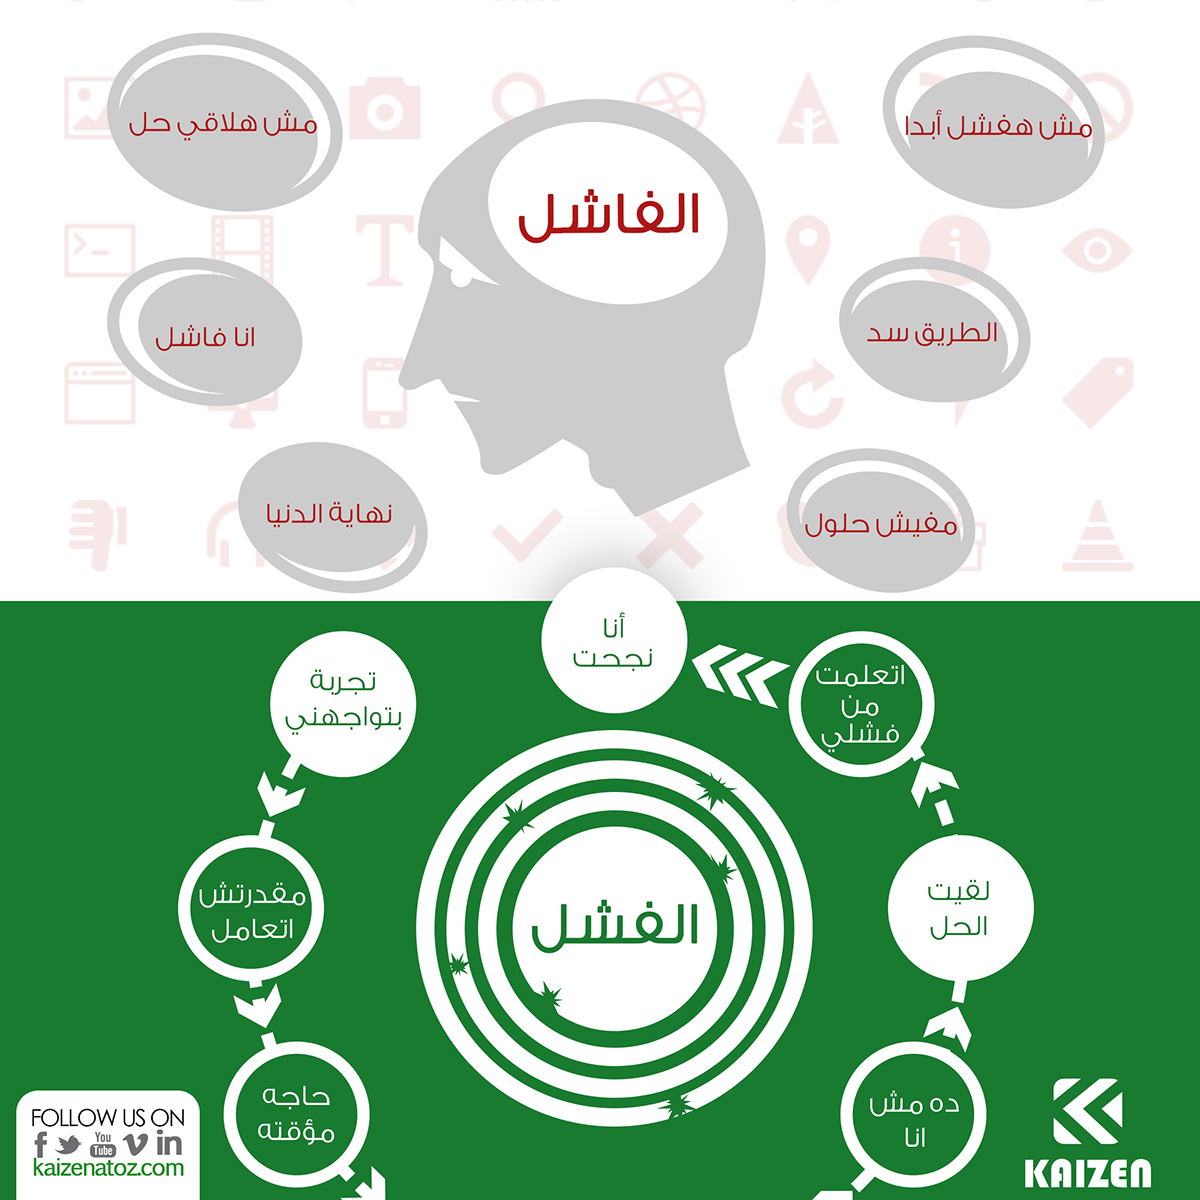 khatawy kaizen flat flat design icons social media infographic #Ps25Under25